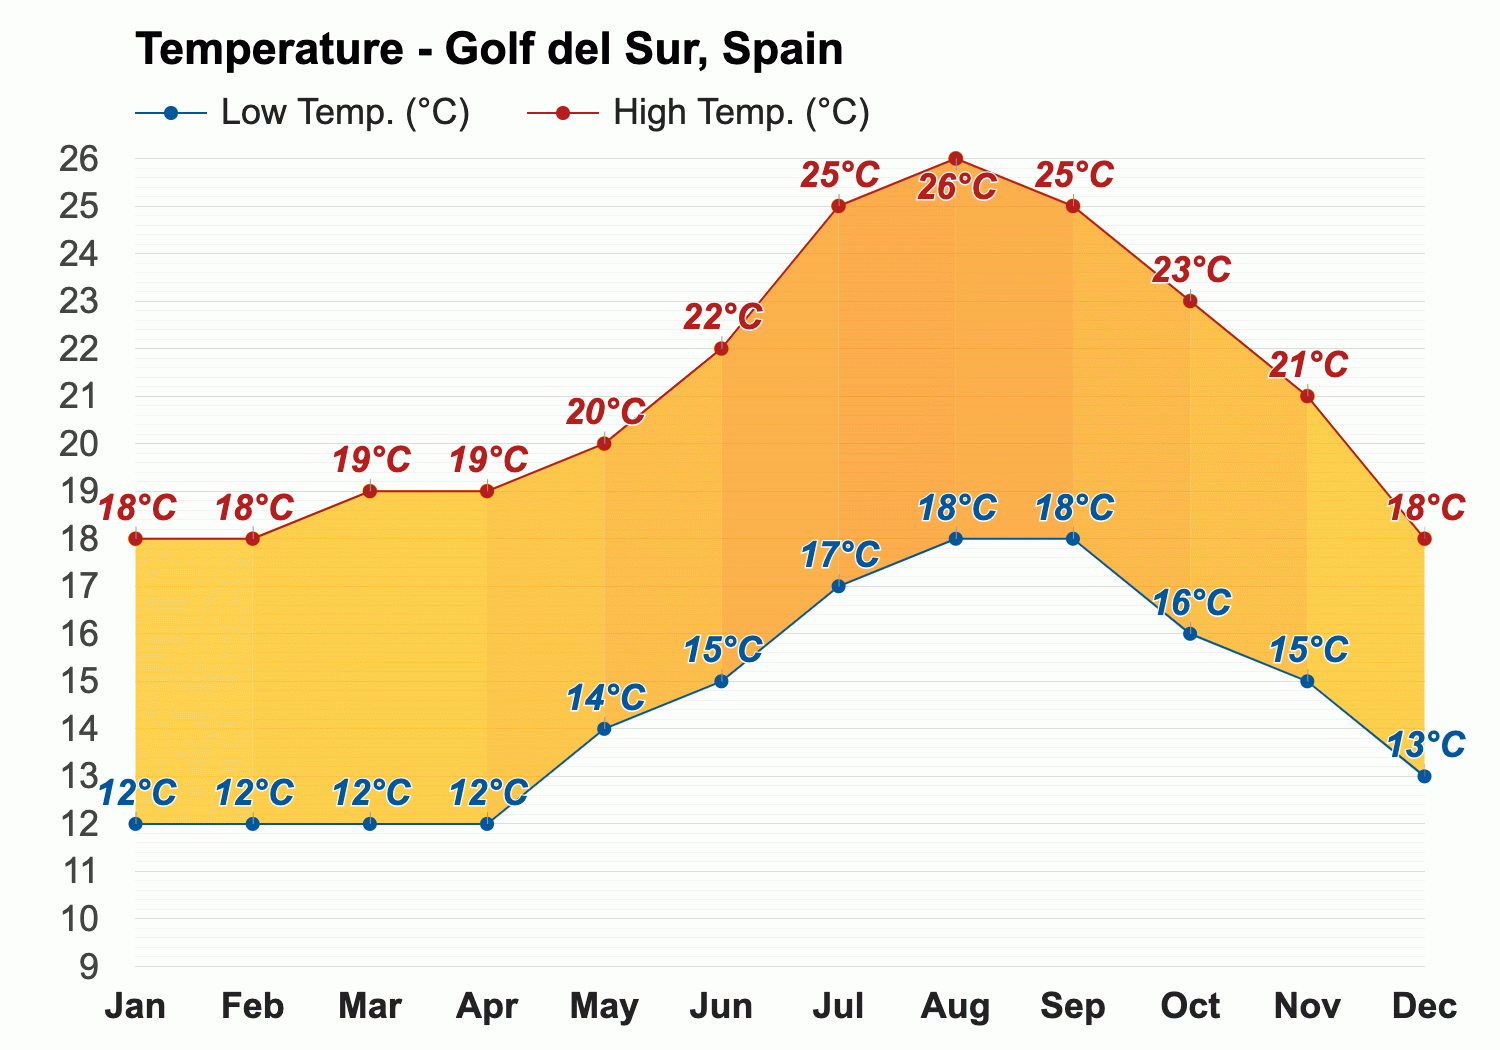 August Weather forecast - Summer forecast - Golf del Sur, Spain